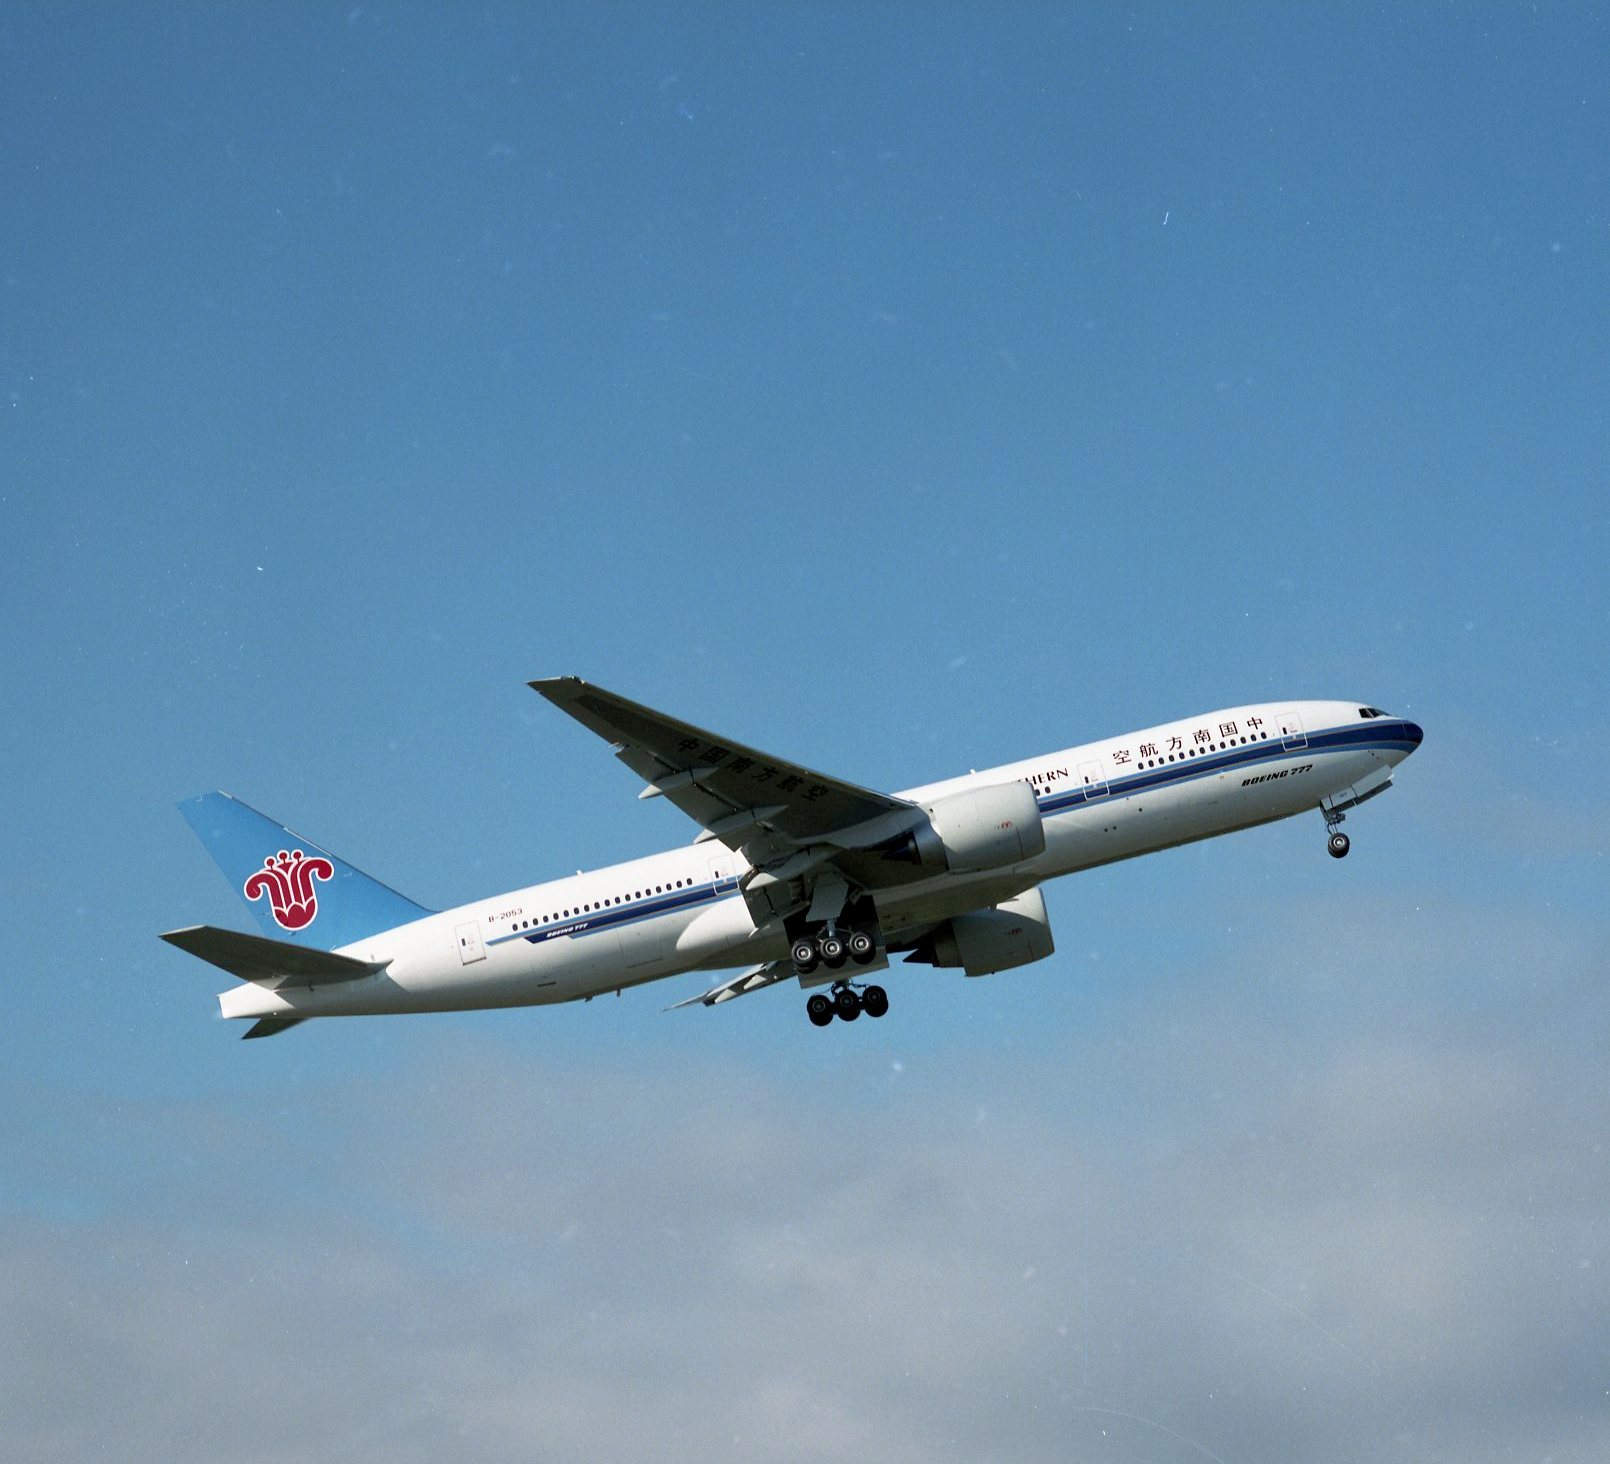 B737-800(738)-波音-中国南方航空公司